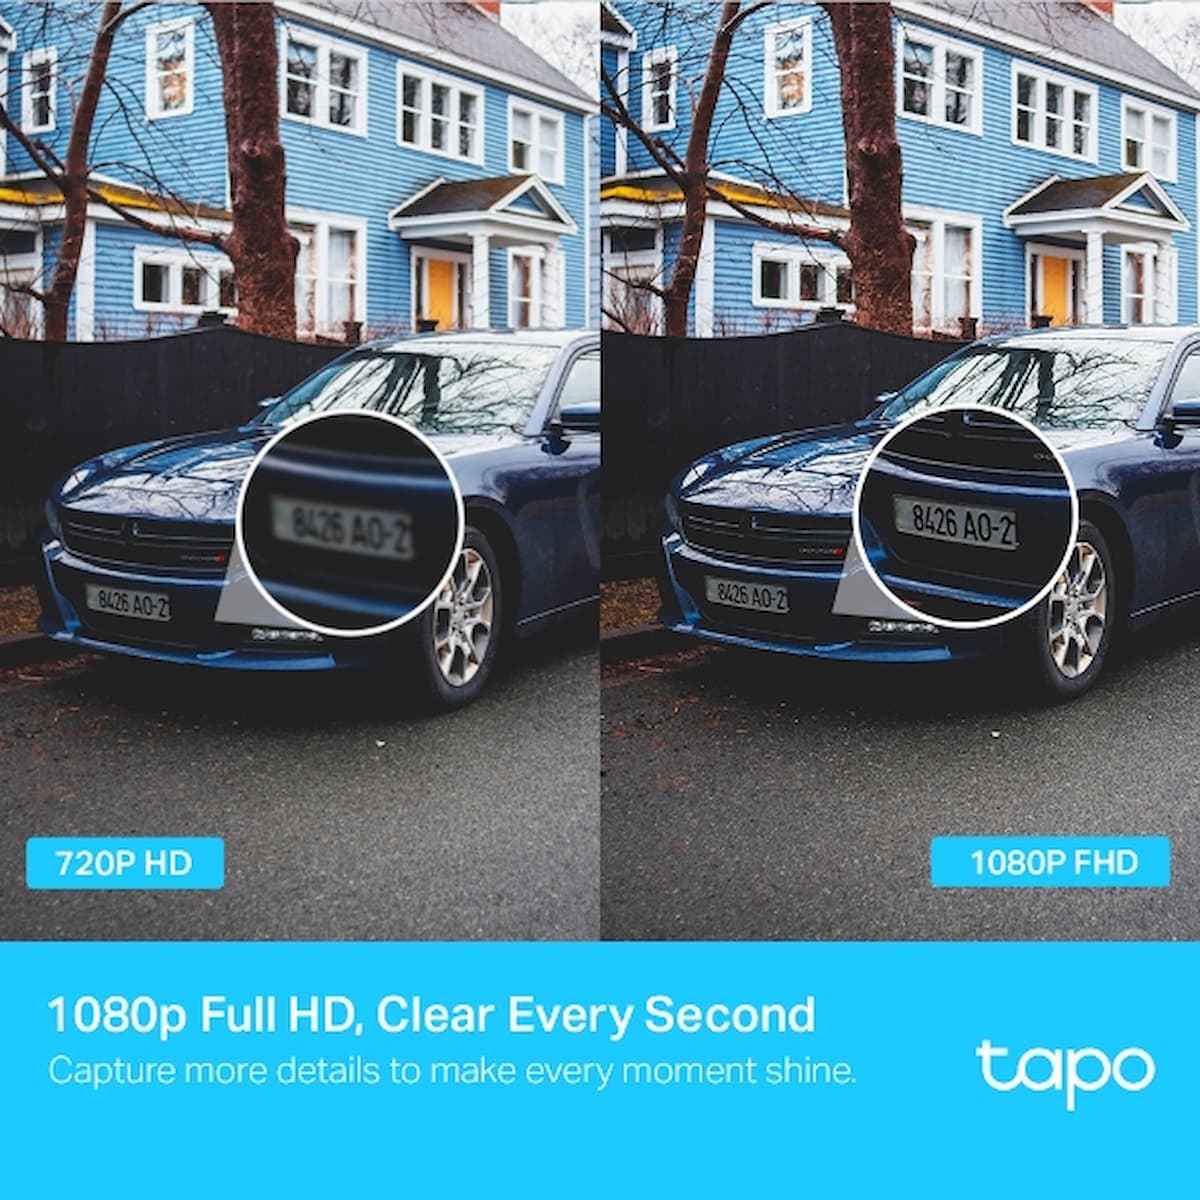 Outdoor Pan/Tilt Security WiFi Camera Tapo C500